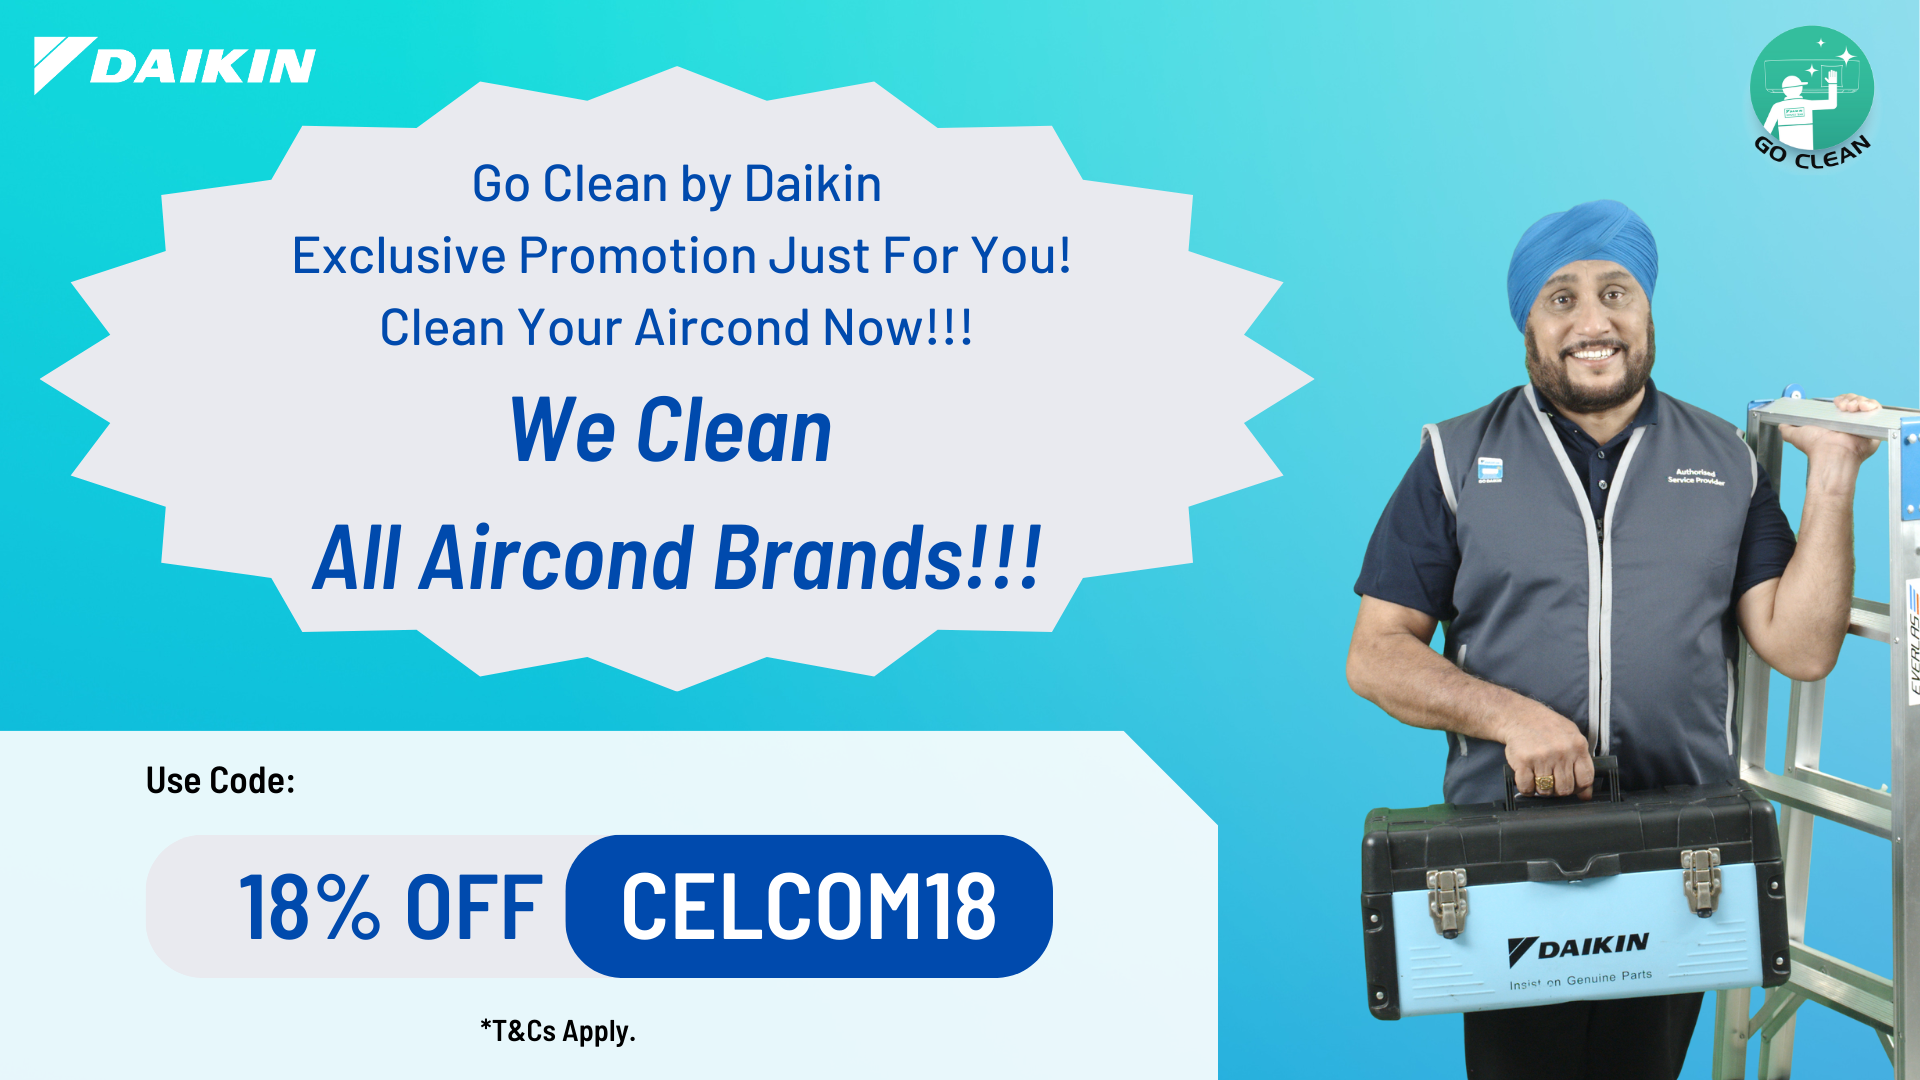 CELCOM18 Enjoy 18% OFF Per Order | Daikin Malaysia